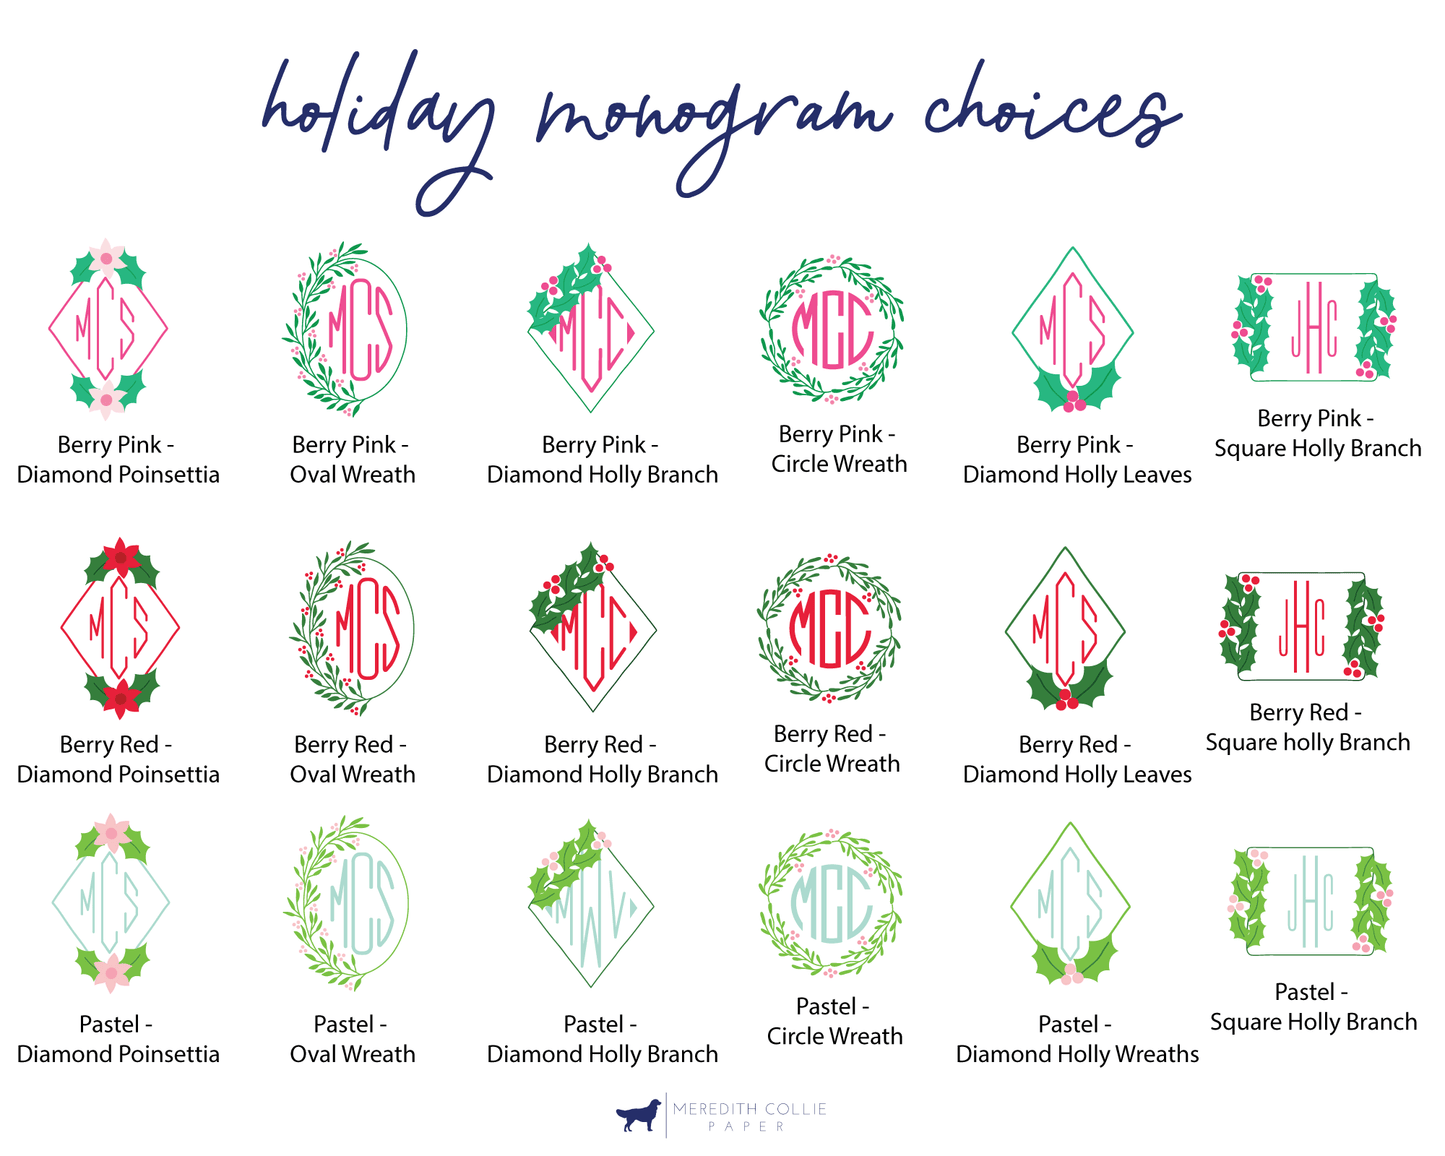 holiday monogram choices, holly monograms, floral monograms, three initial monograms, Christmas monograms